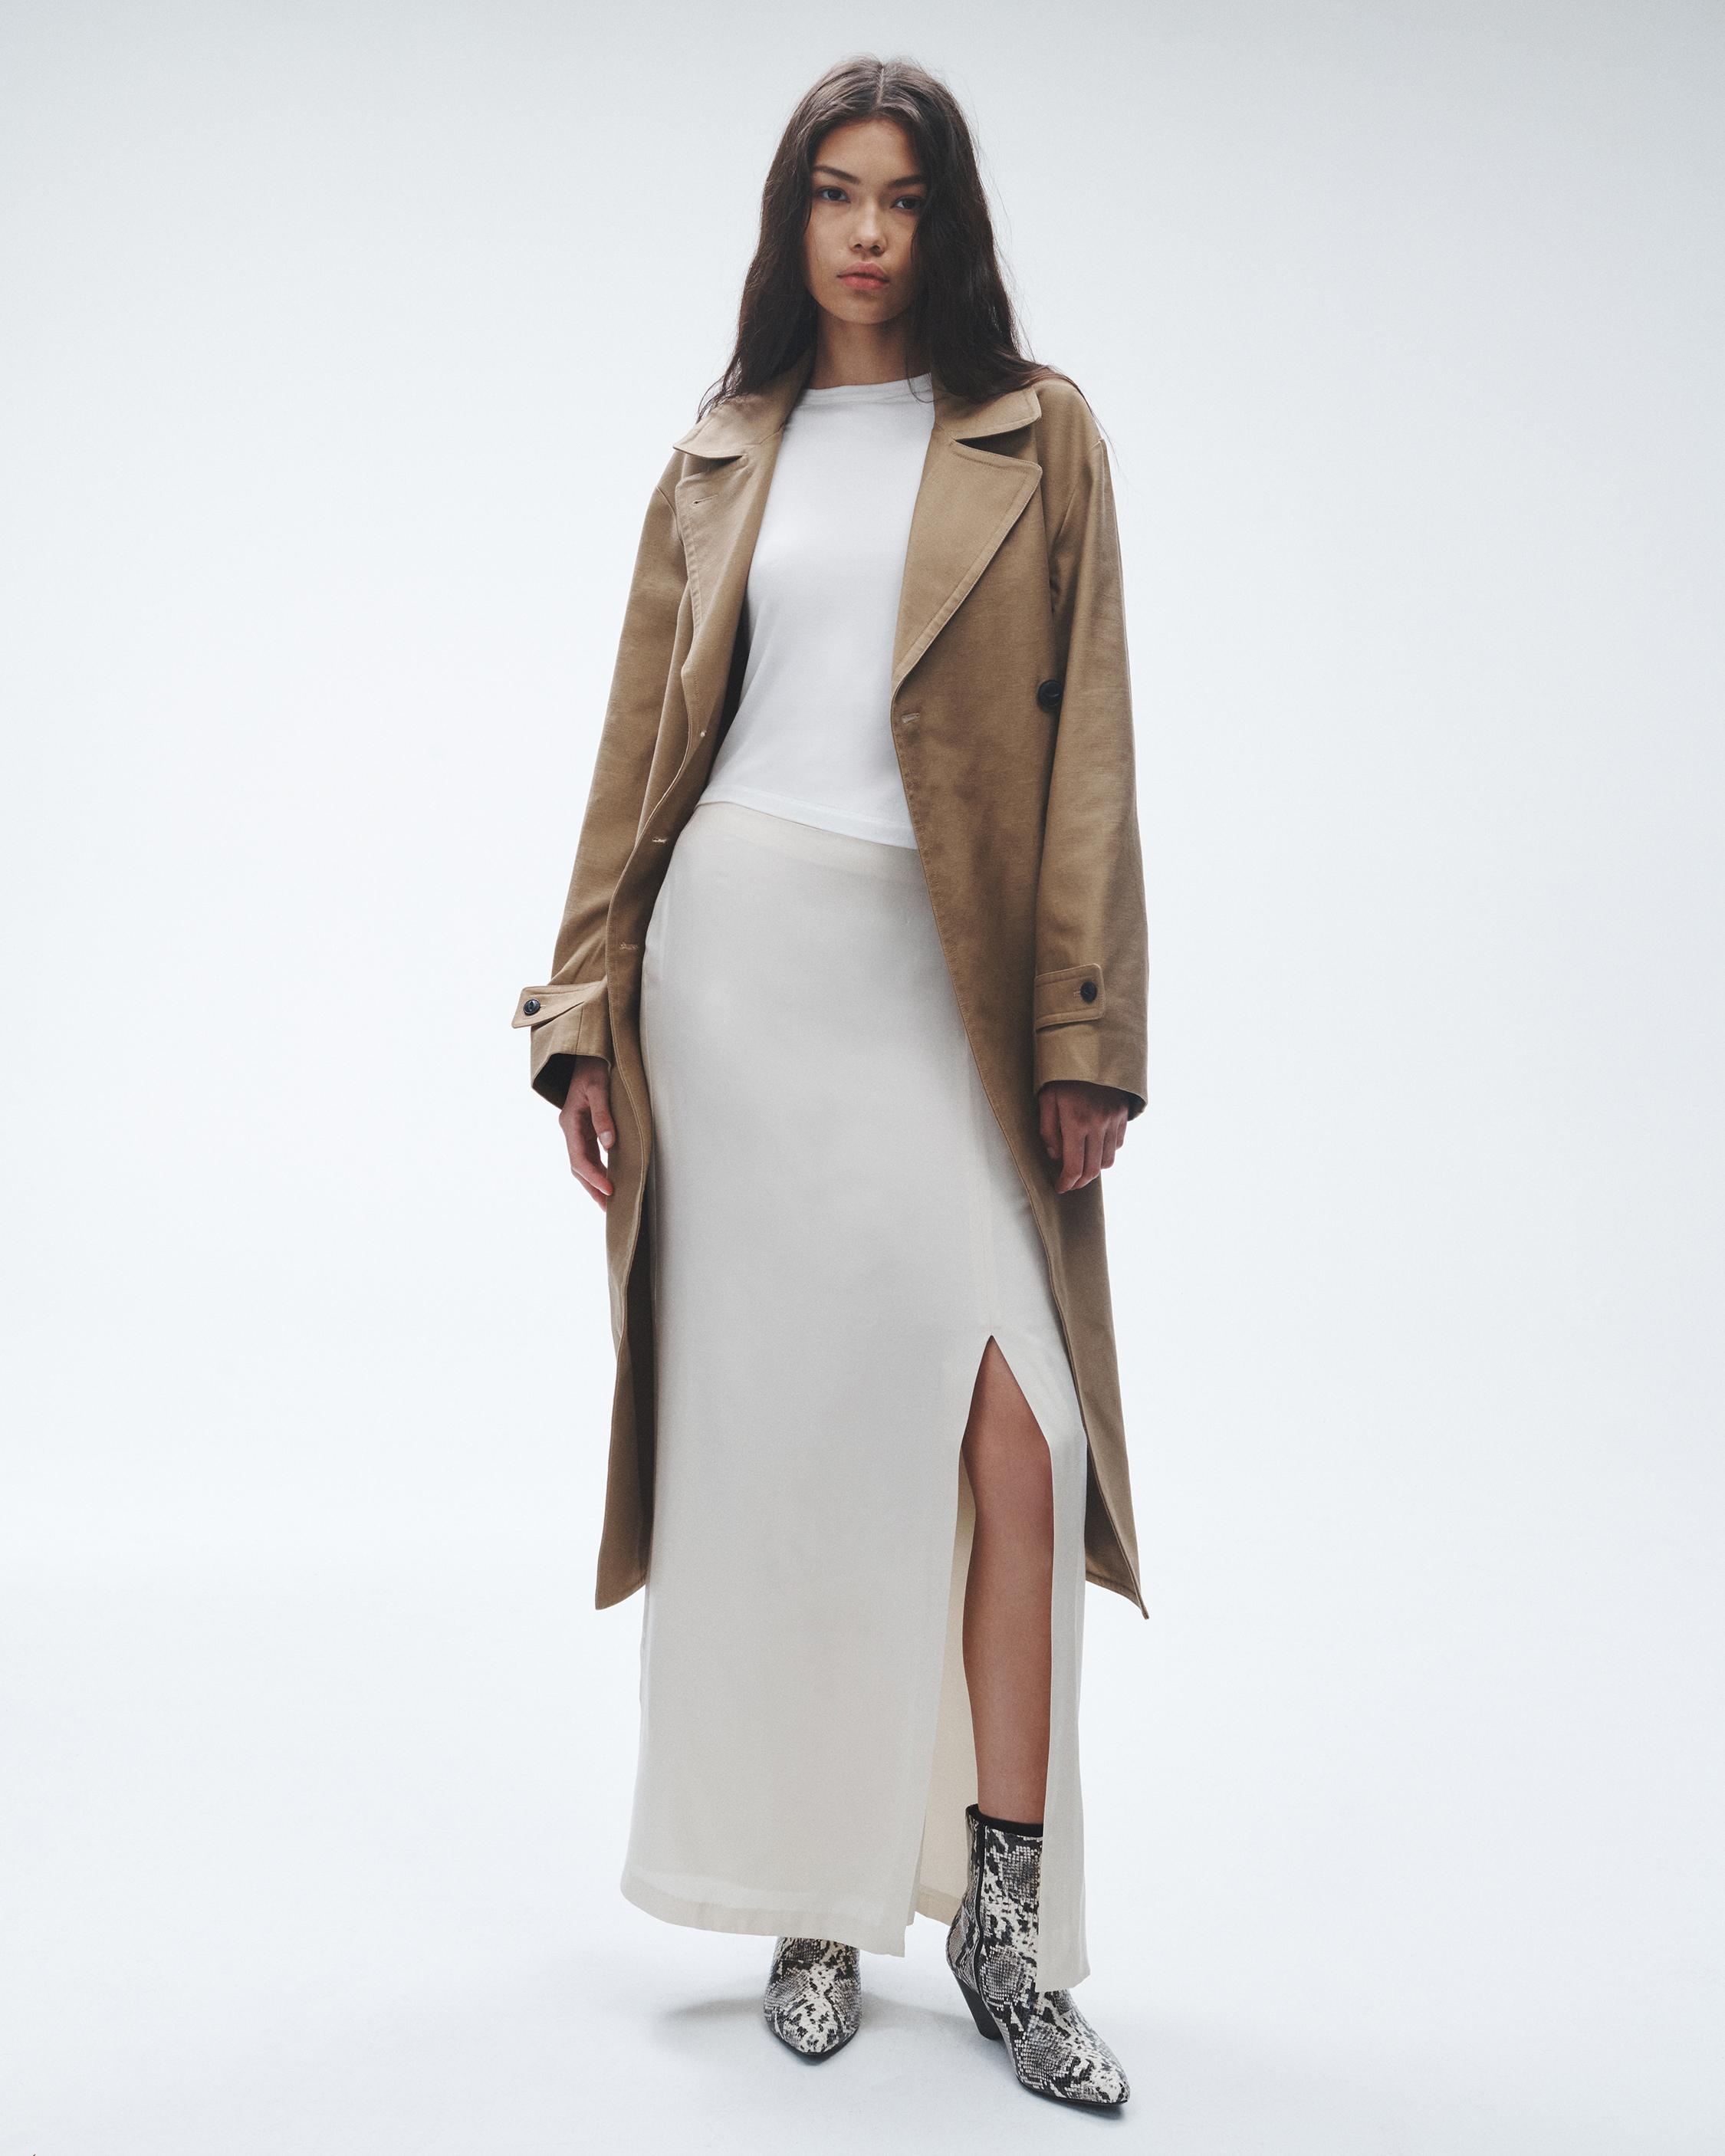 Ilana Silk Skirt
Maxi - 2